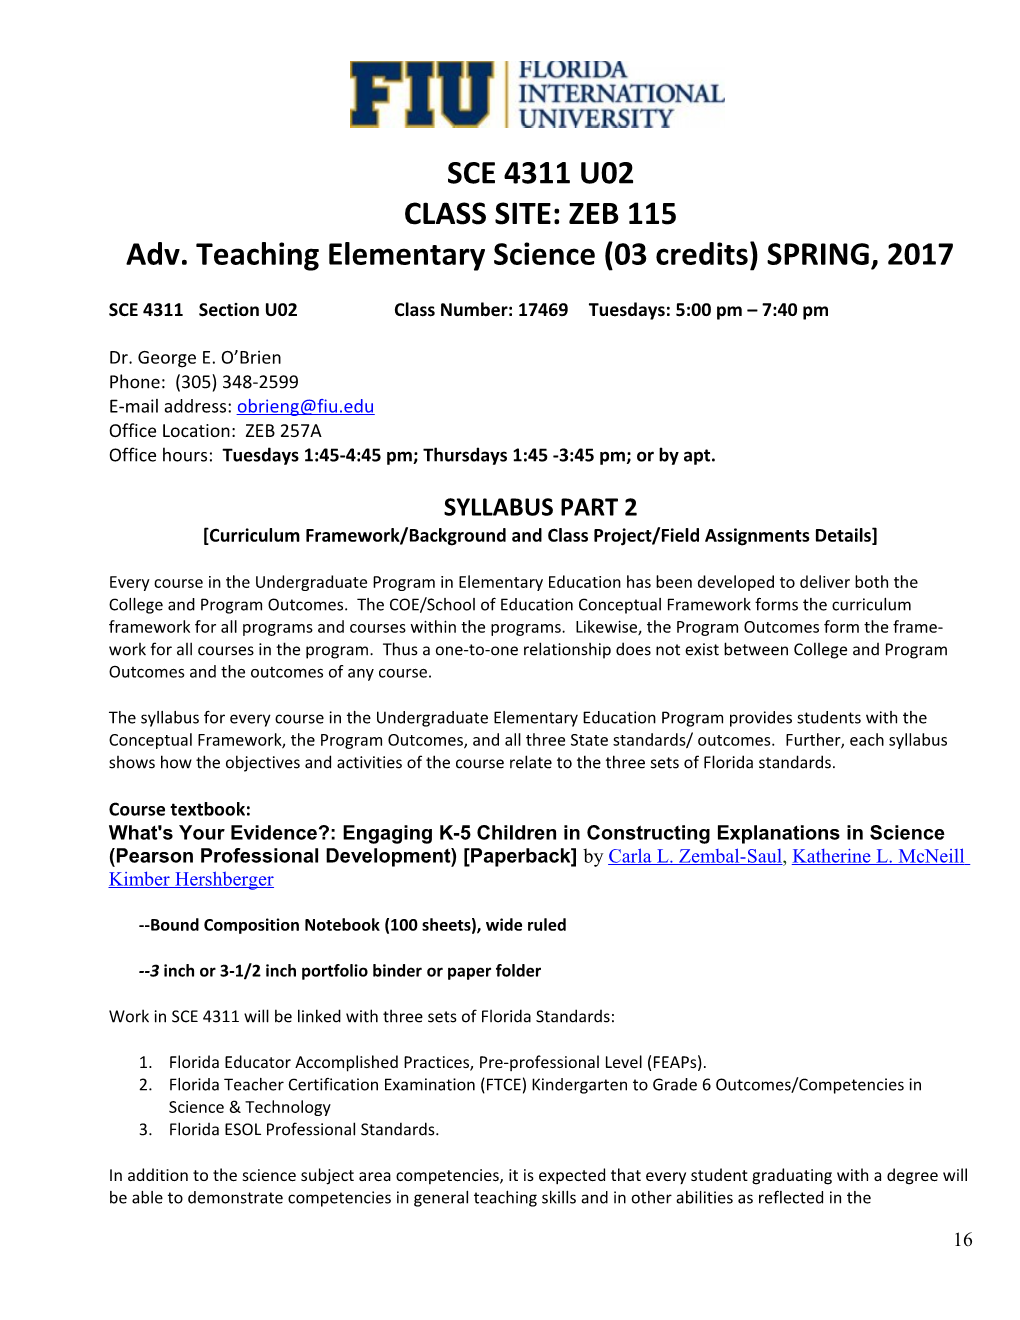 SCE 4311 U02 CLASS SITE: ZEB 115 Adv. Teaching Elementary Science(03 Credits) SPRING, 2017